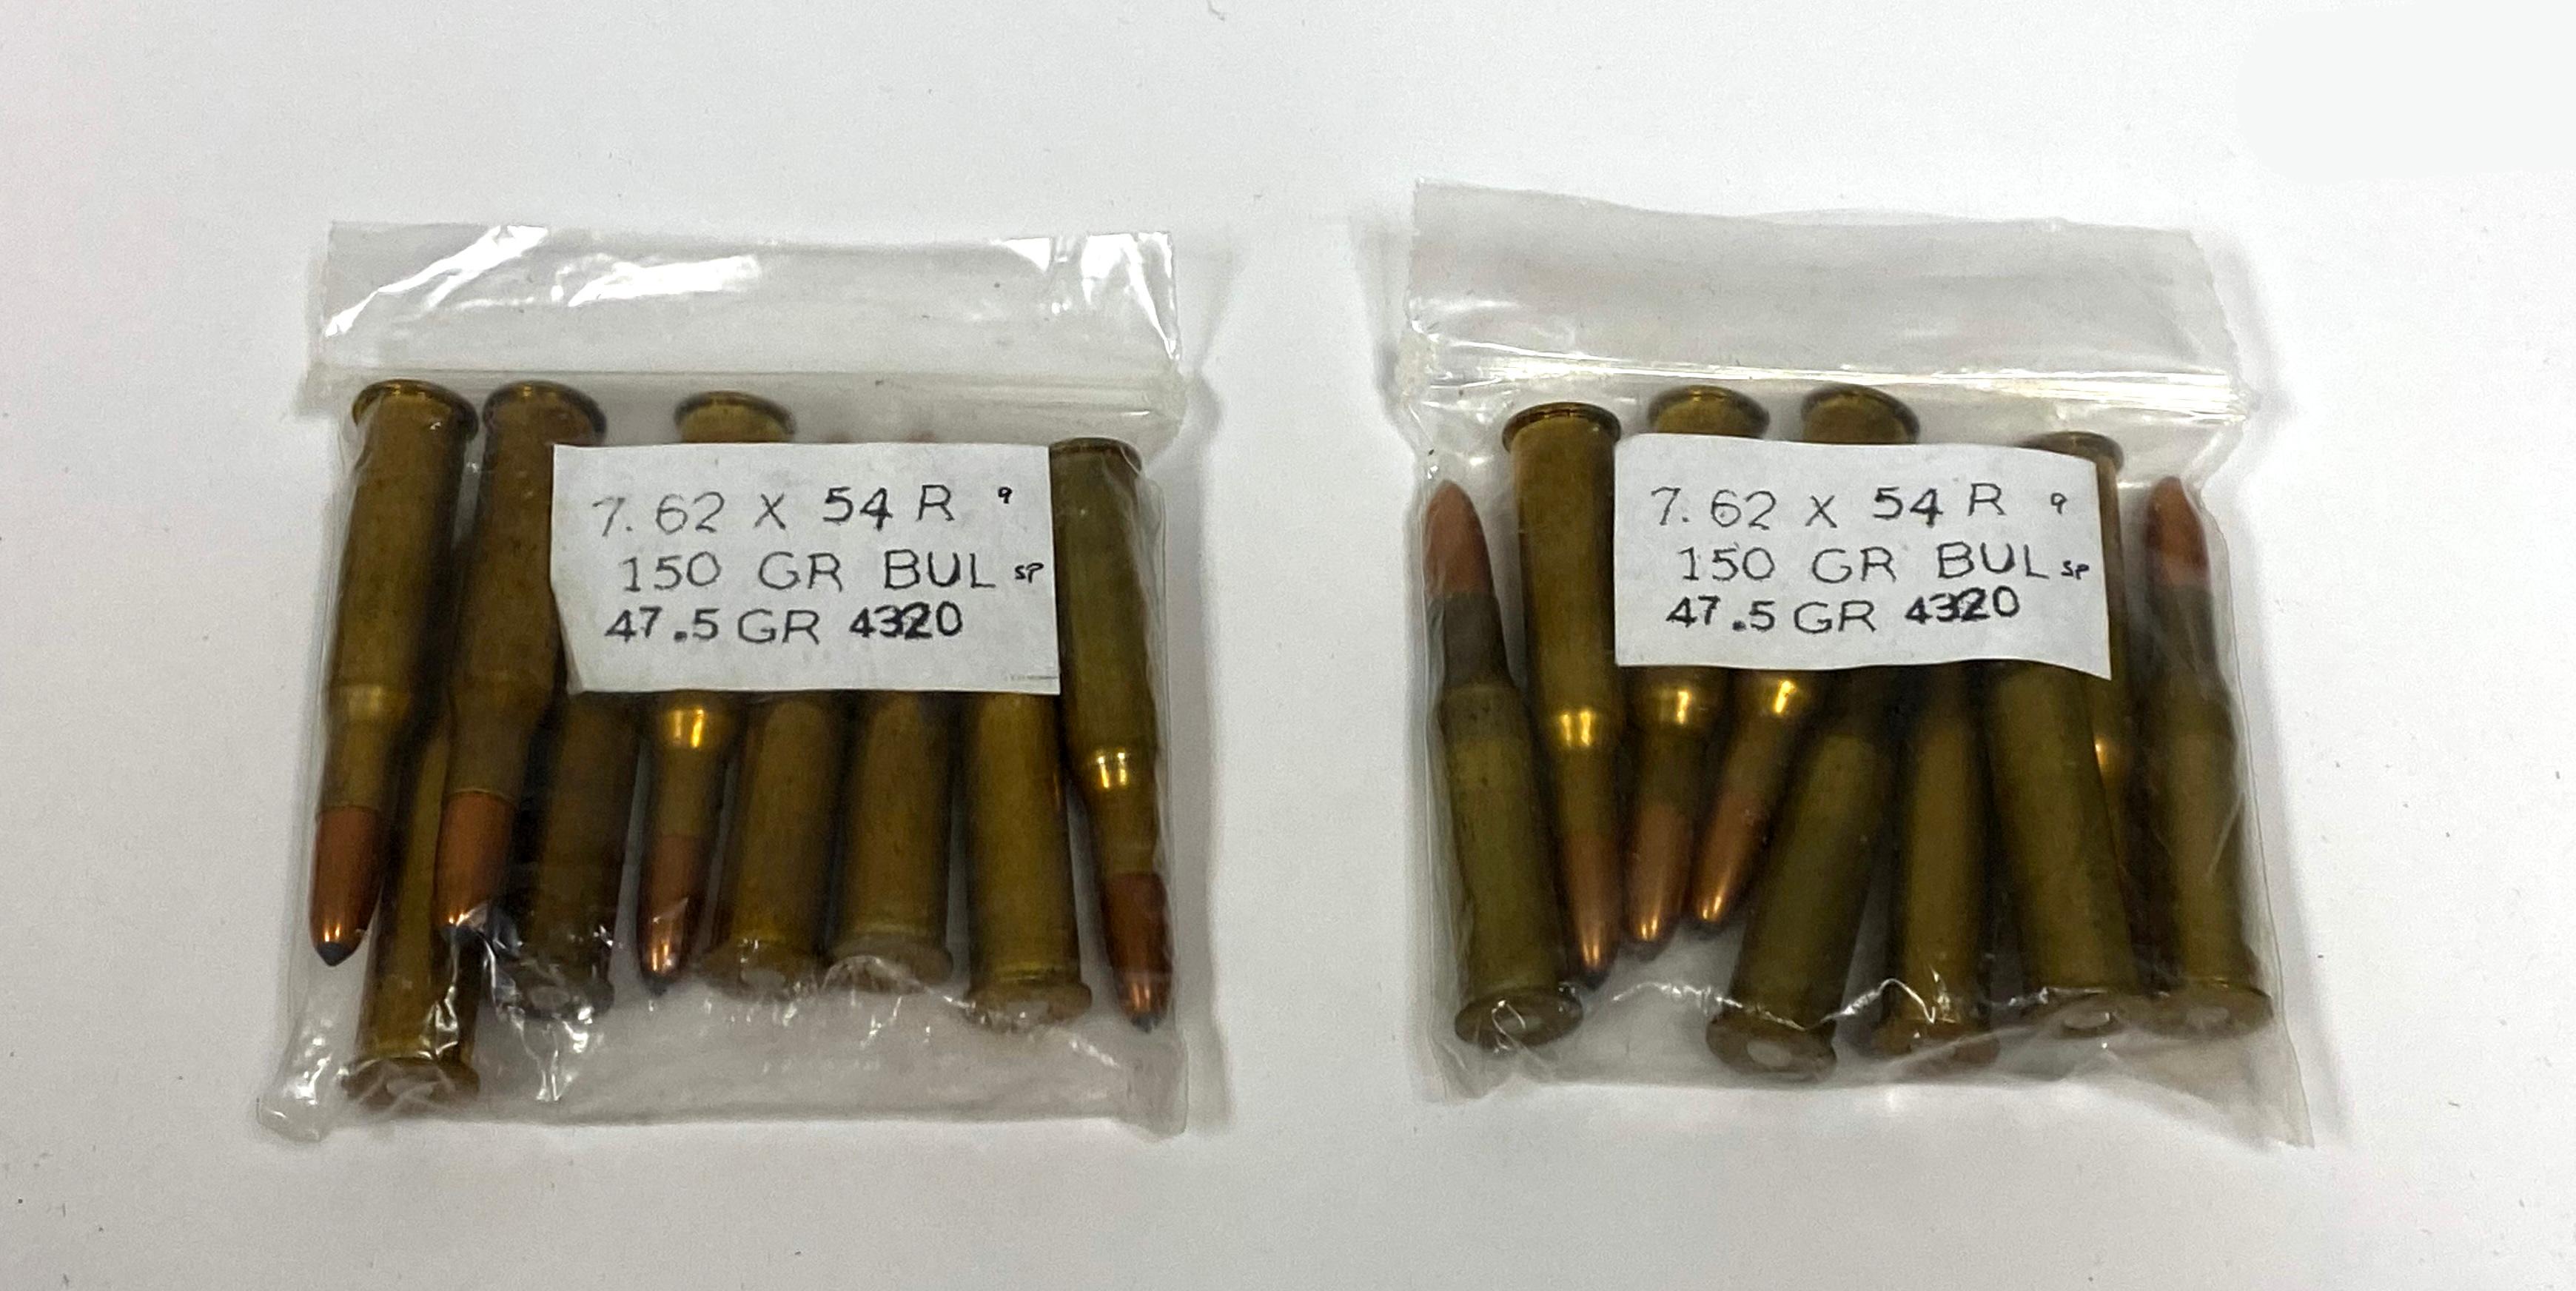 New 18rds. of 7.62x54r 150gr. BUL Ammunition